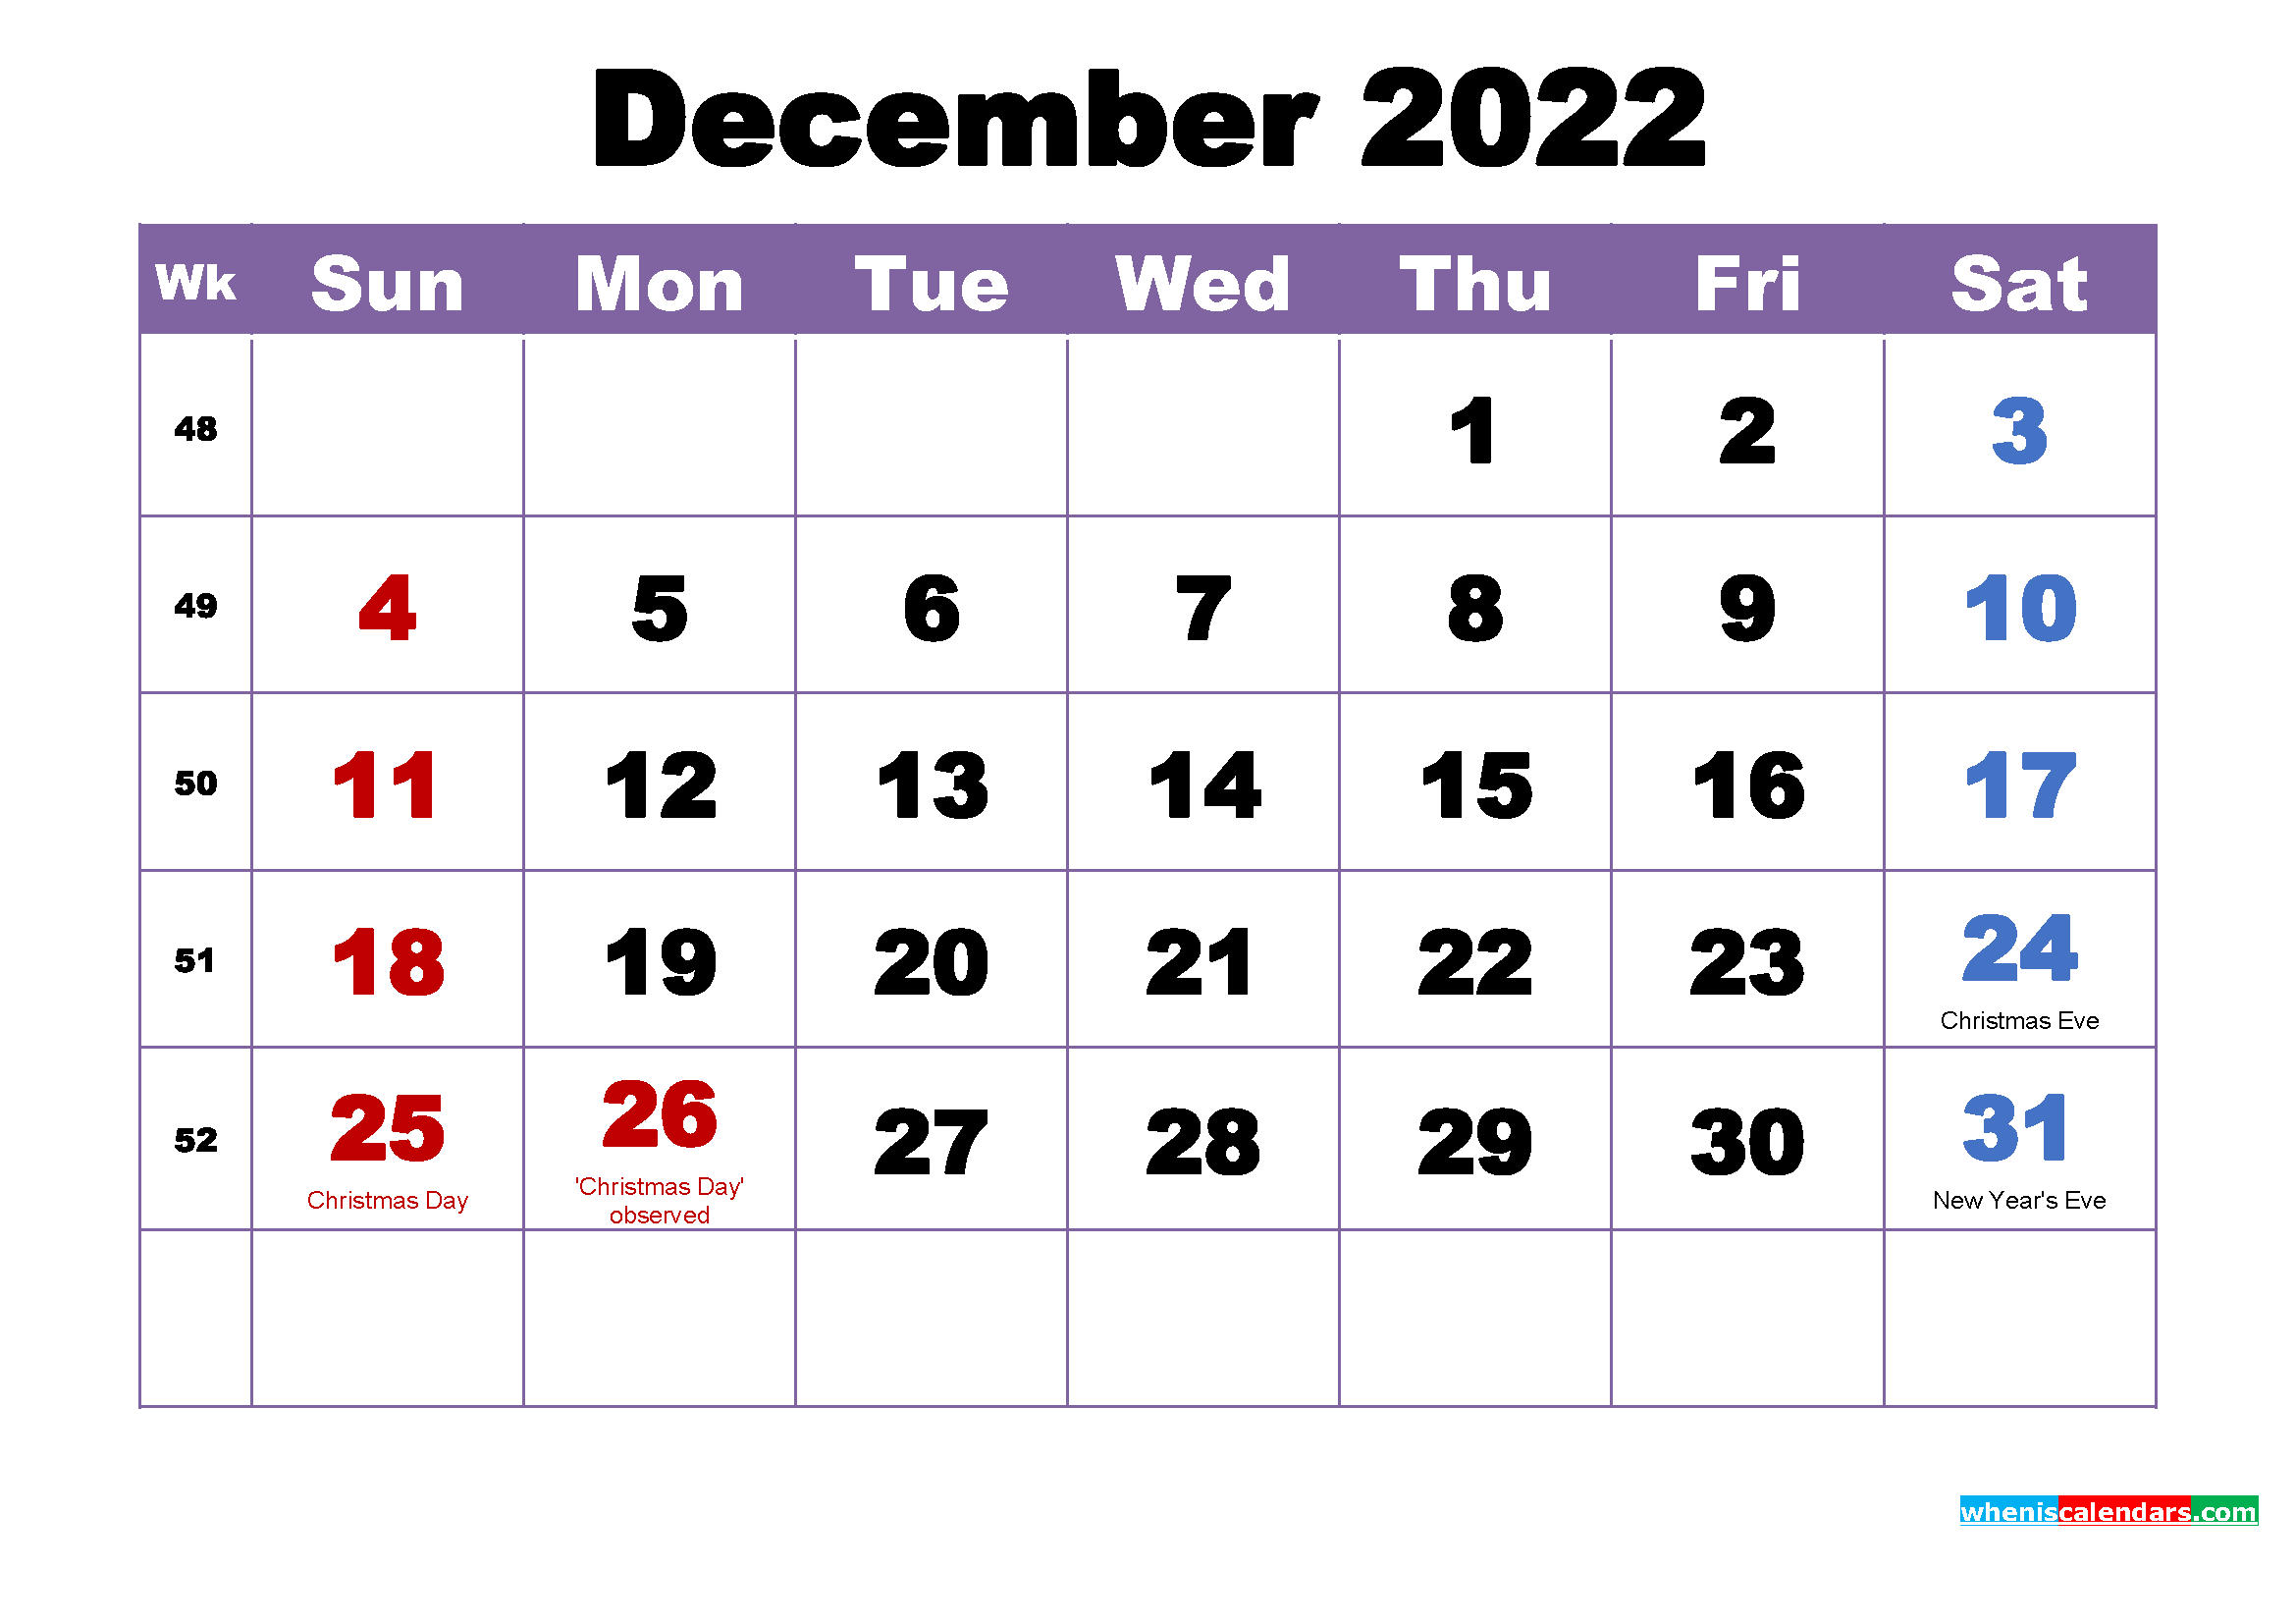 Dec 2022 Calendar Printable Free December 2022 Calendar With Holidays Printable